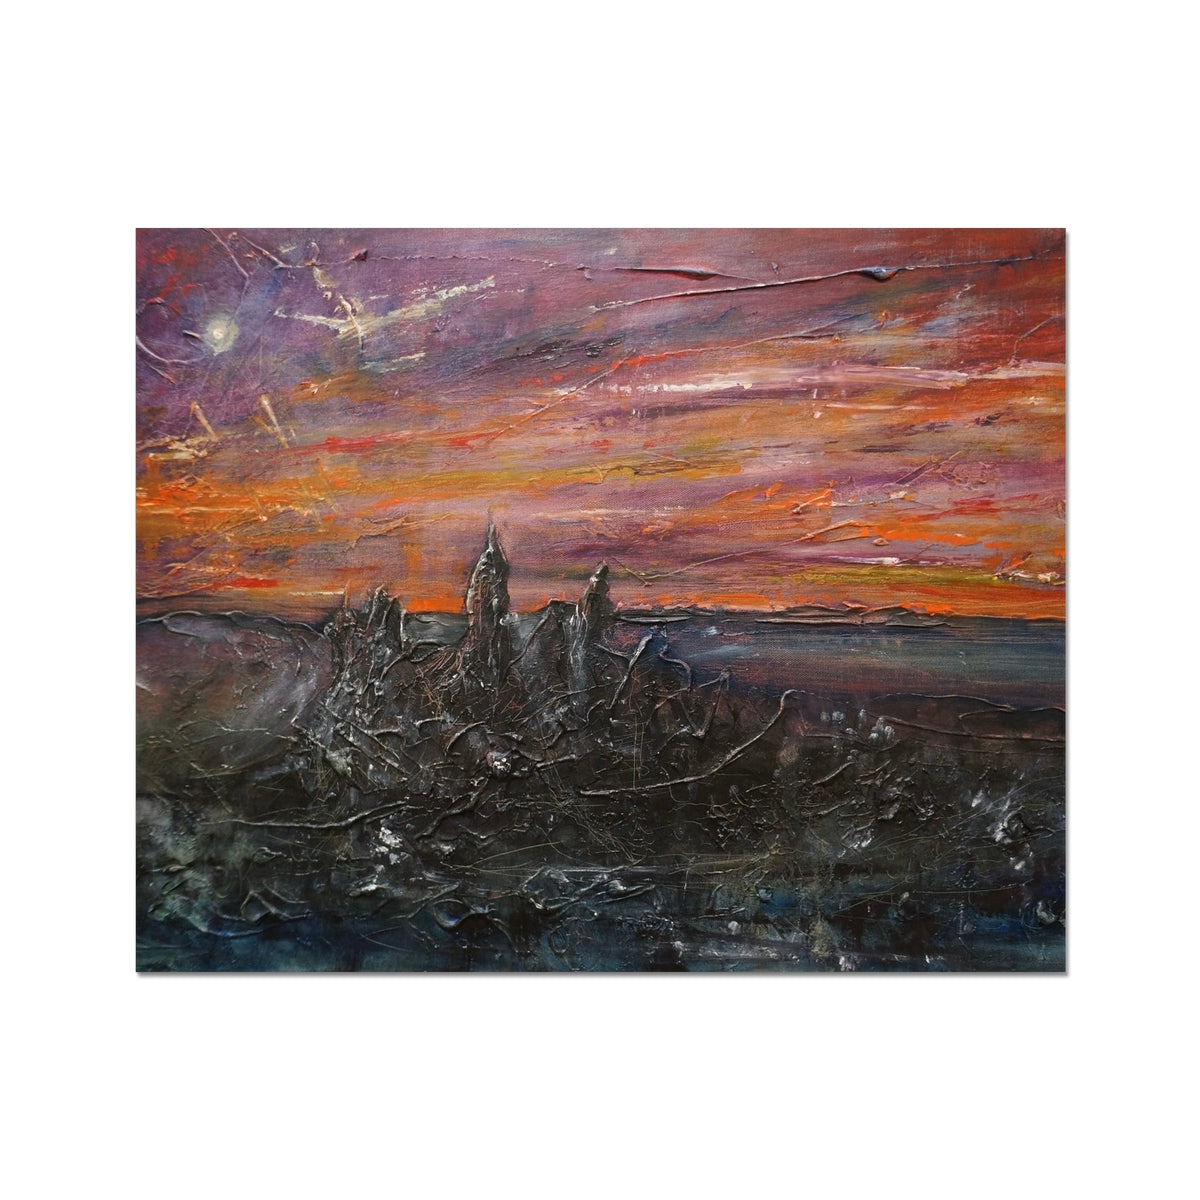 Storr Moonlight Skye Painting | Hahnemühle German Etching Prints From Scotland-Fine art-Skye Art Gallery-20"x16"-Paintings, Prints, Homeware, Art Gifts From Scotland By Scottish Artist Kevin Hunter